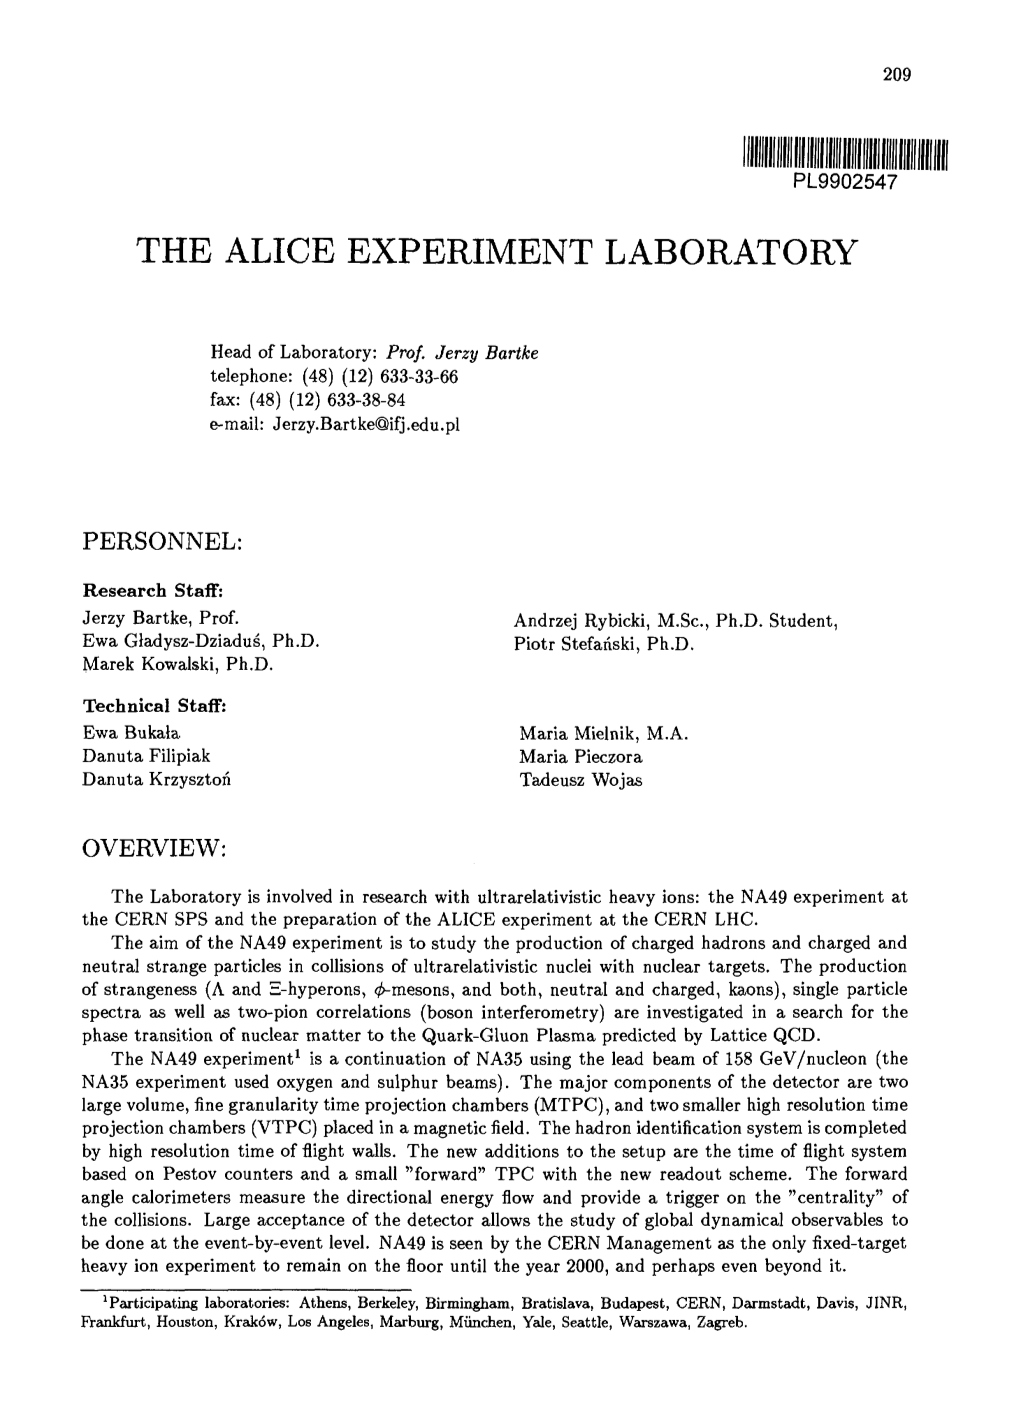 The Alice Experiment Laboratory